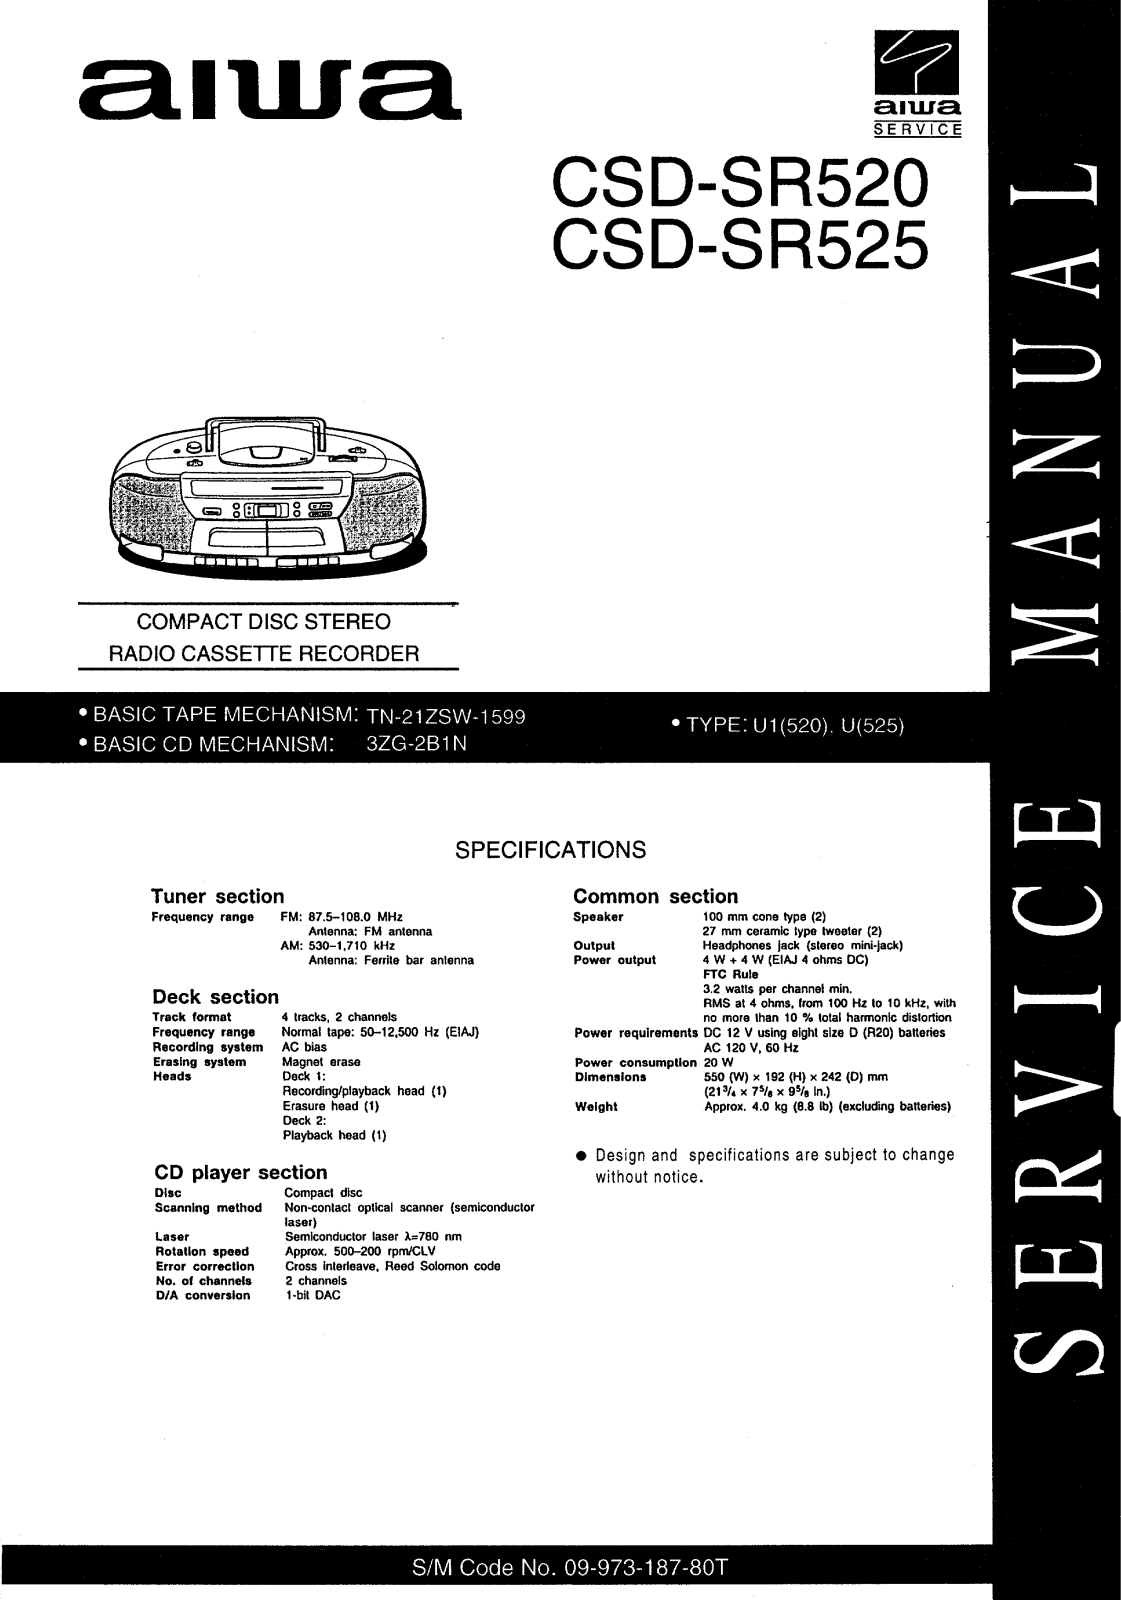 Aiwa CSD-SR520, CSD-SR525 Service Manual